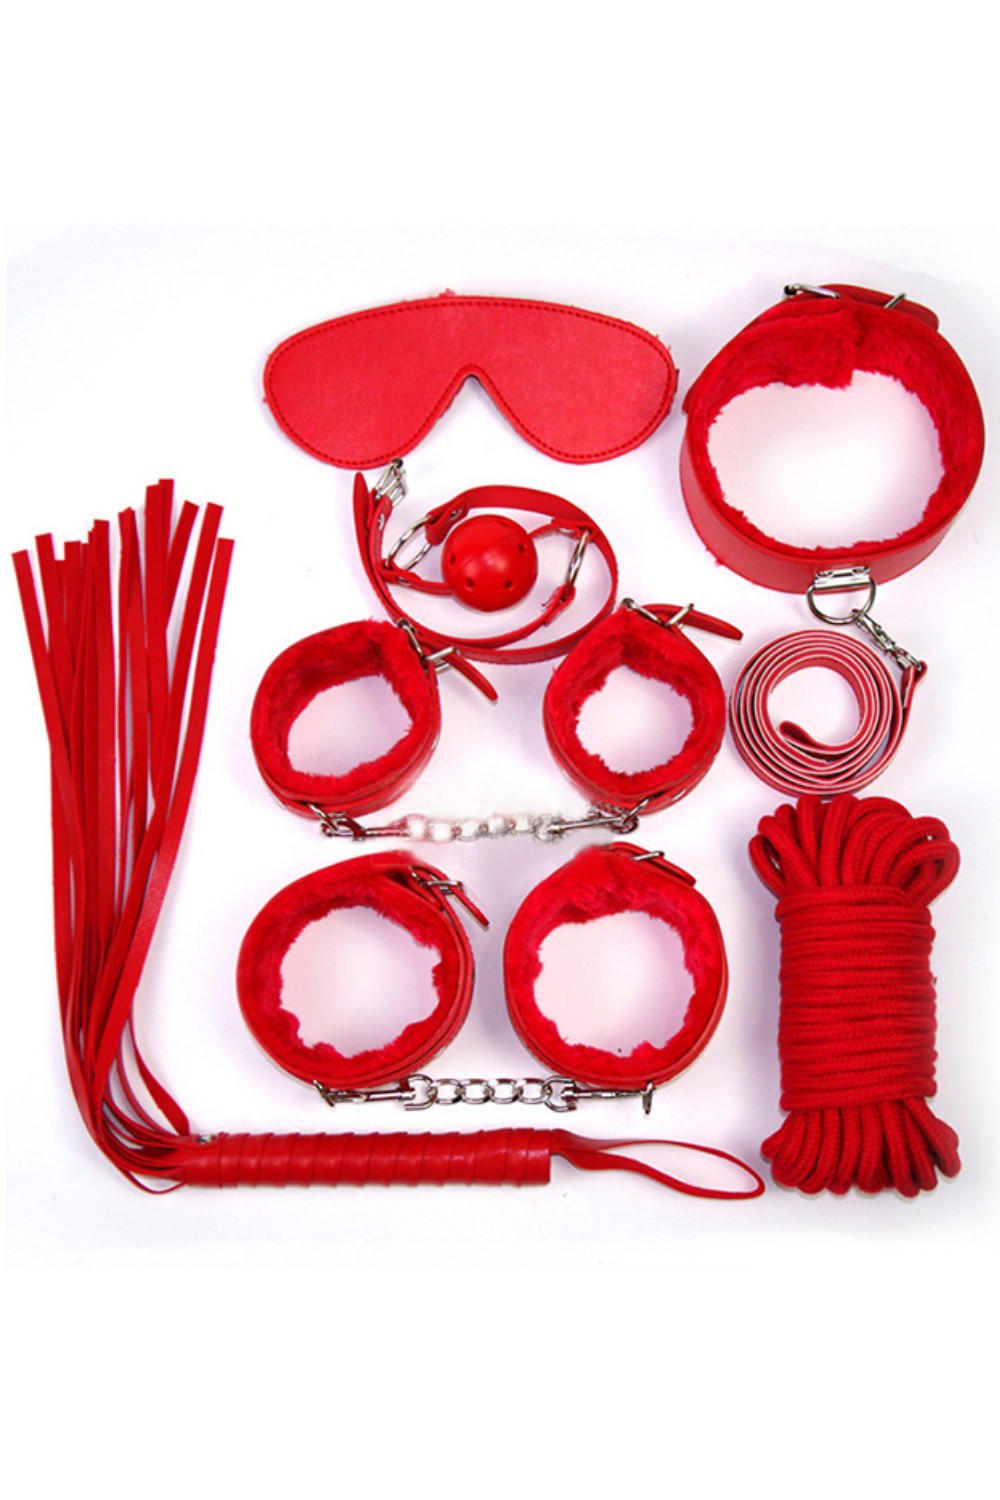 Kit bondage noir et rouge - SARL G2TO